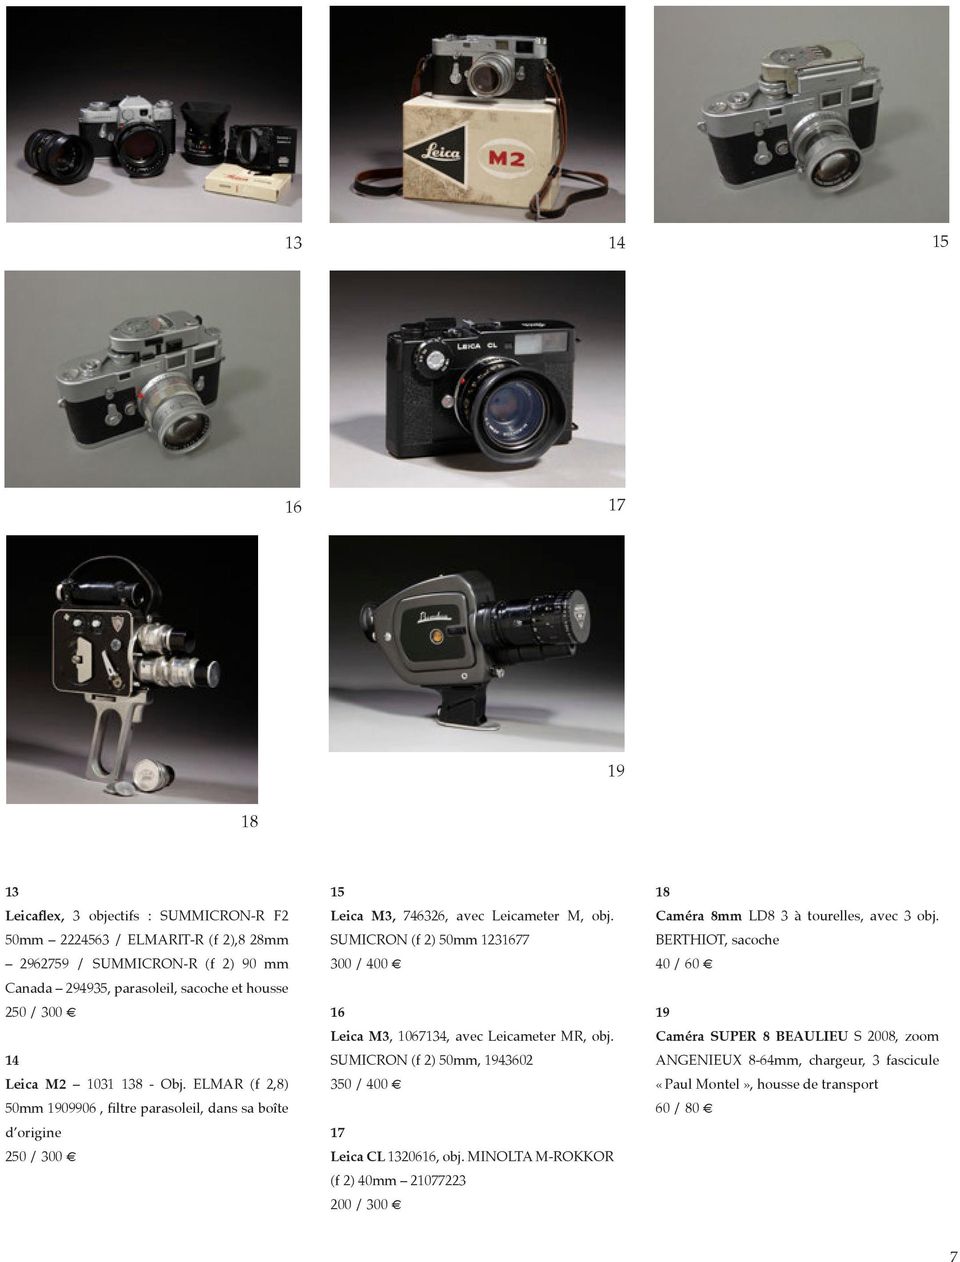 SUMICRON (f 2) 50mm 1231677 300 / 400 16 Leica M3, 1067134, avec Leicameter MR, obj. SUMICRON (f 2) 50mm, 1943602 350 / 400 17 Leica CL 1320616, obj.